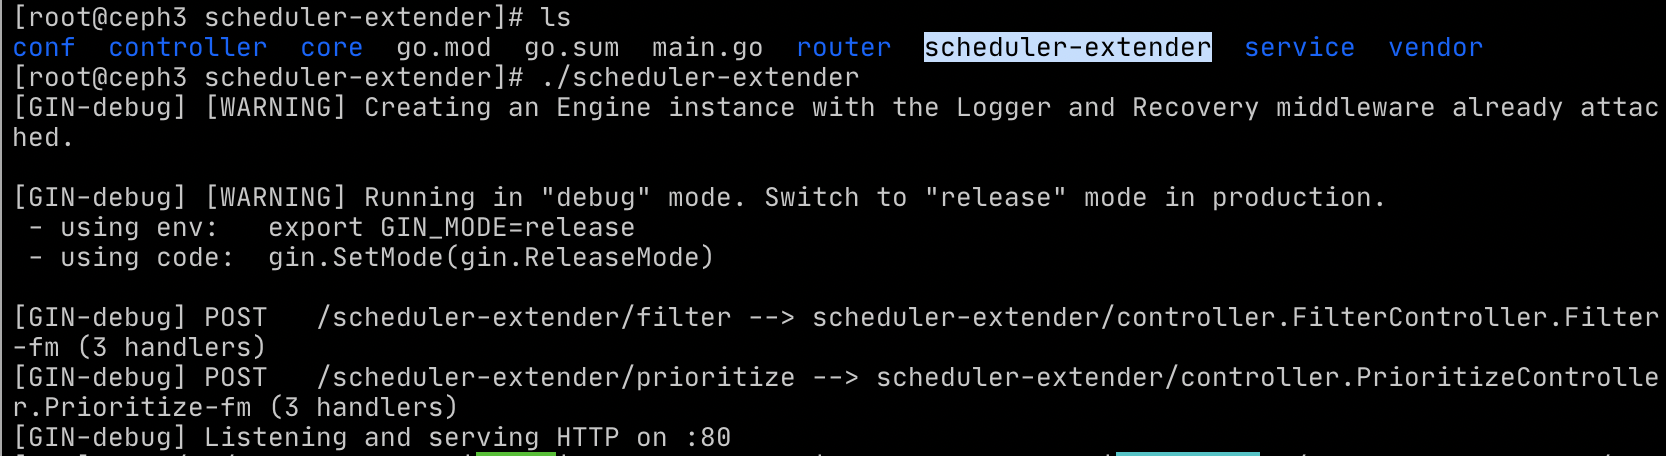 scheduler-extender